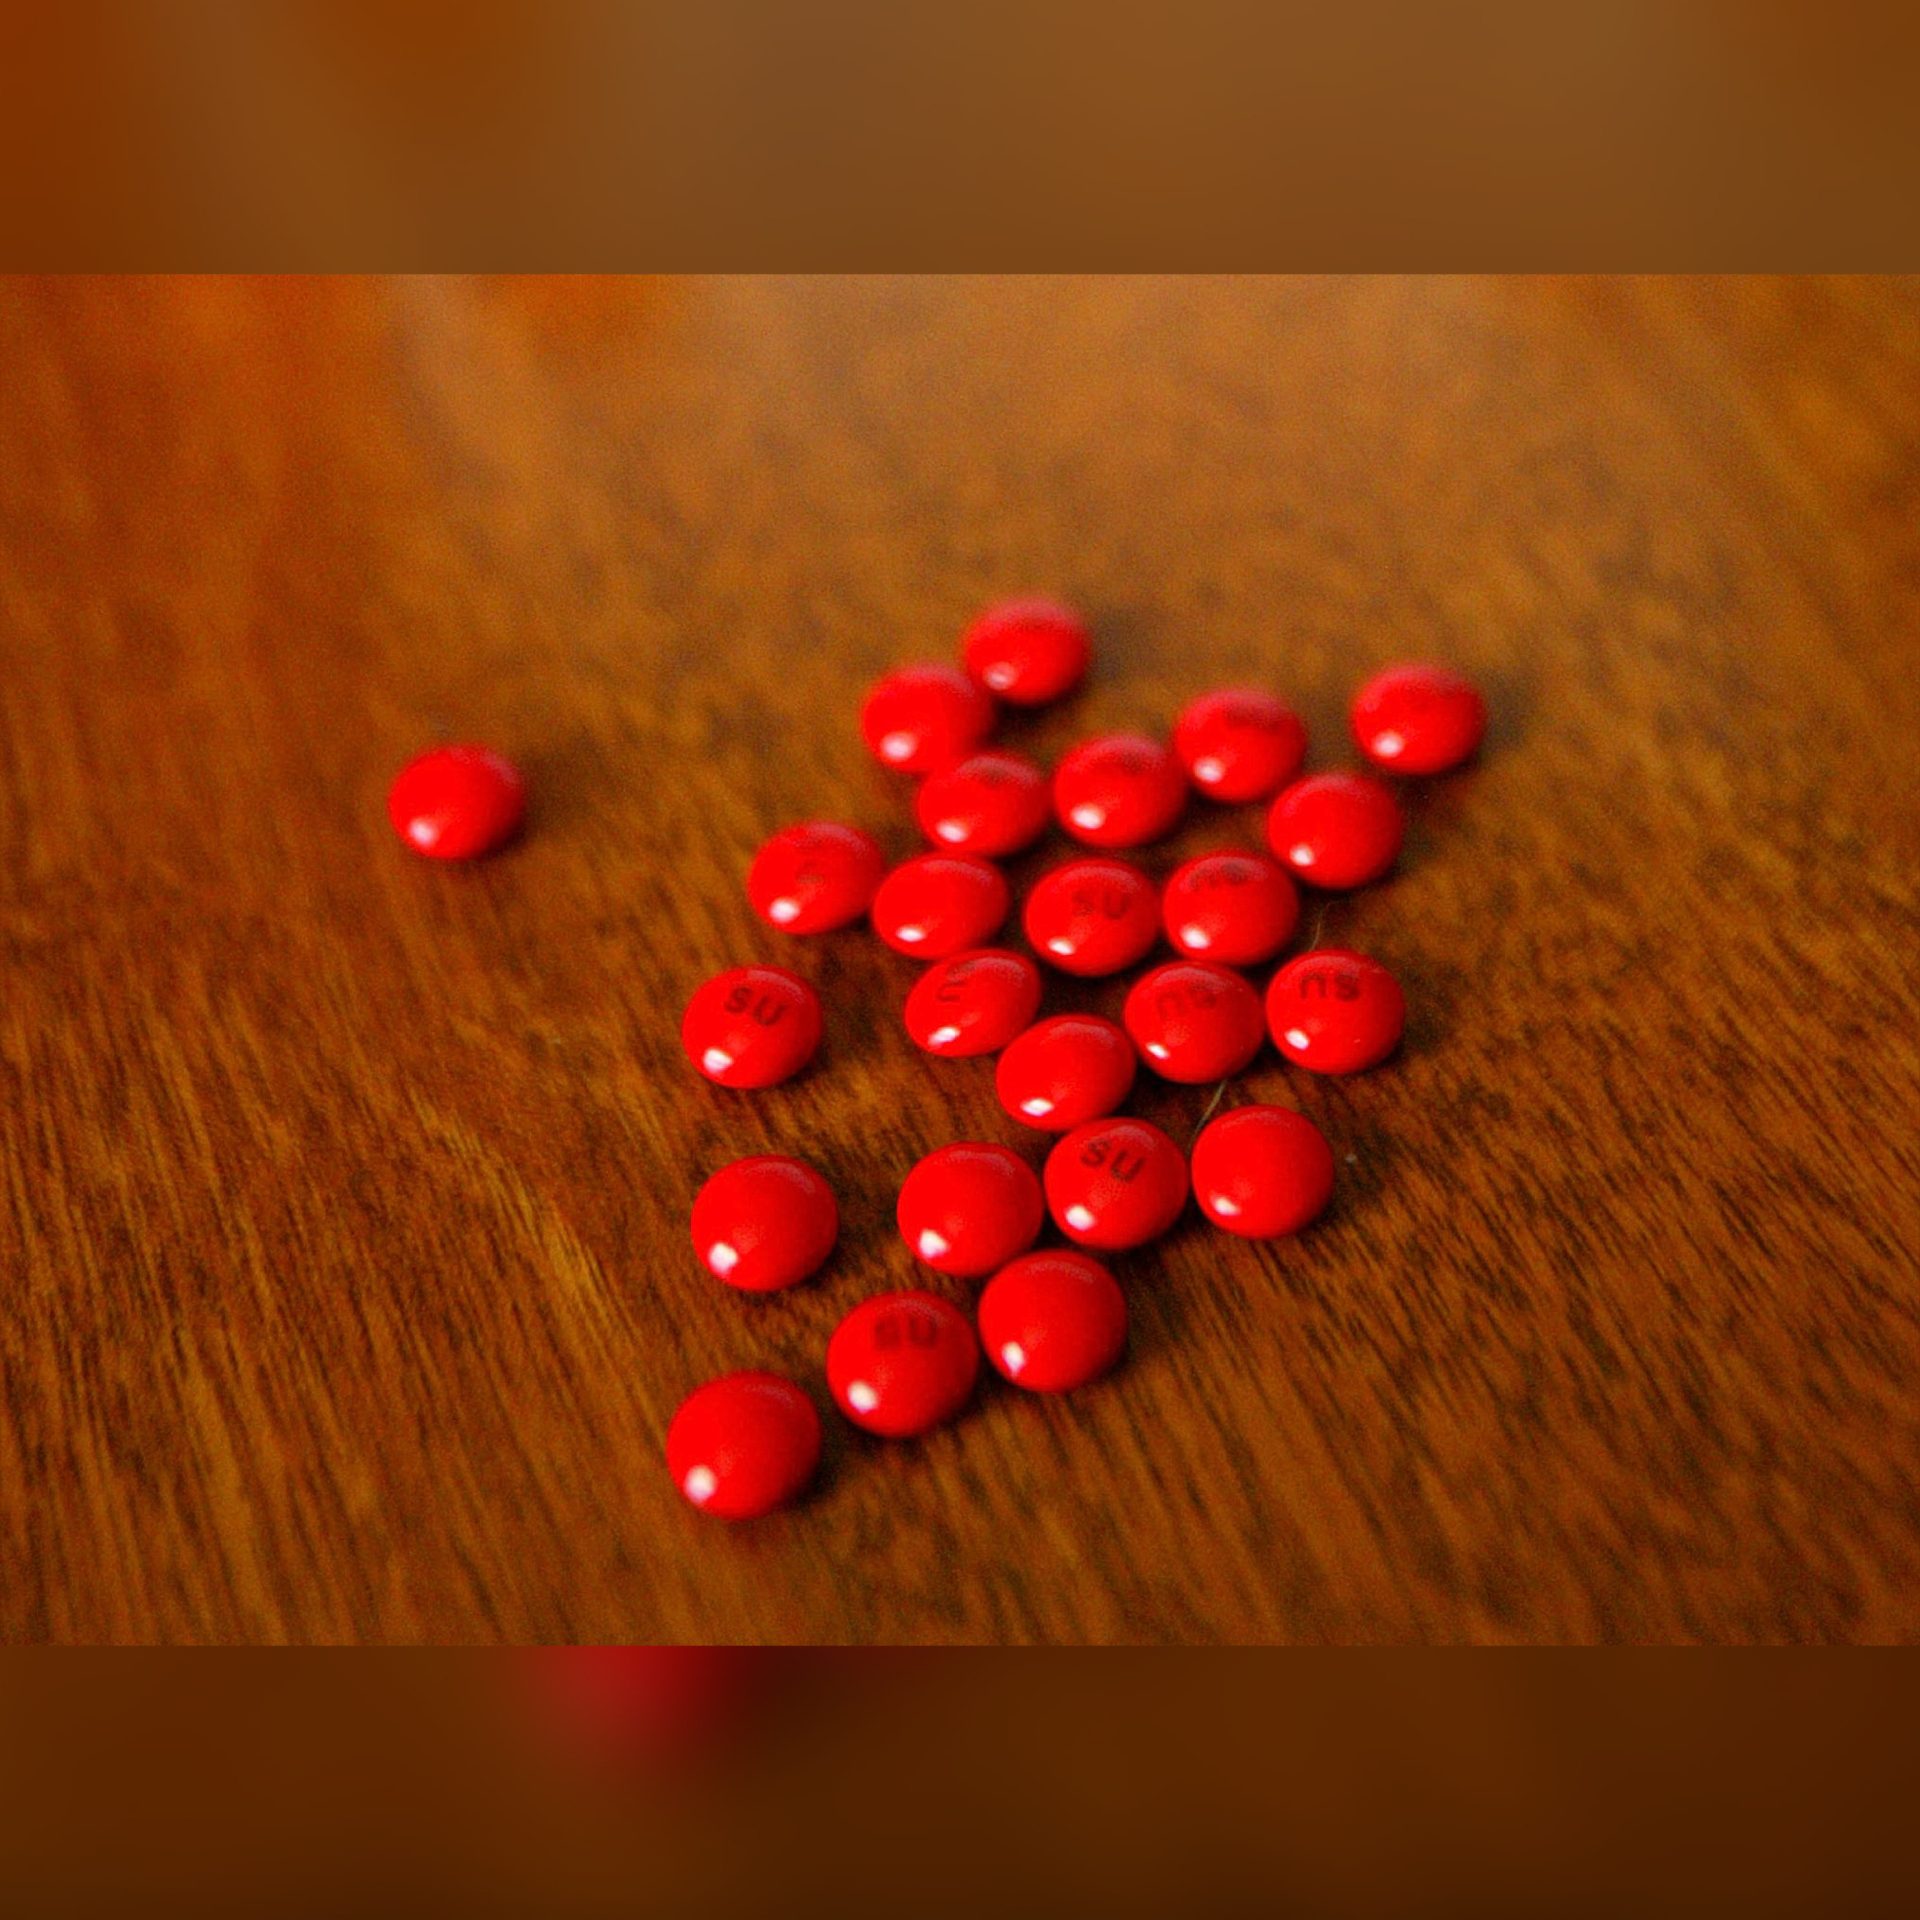 Research Shows The Number Of Children Overdosing On Melatonin